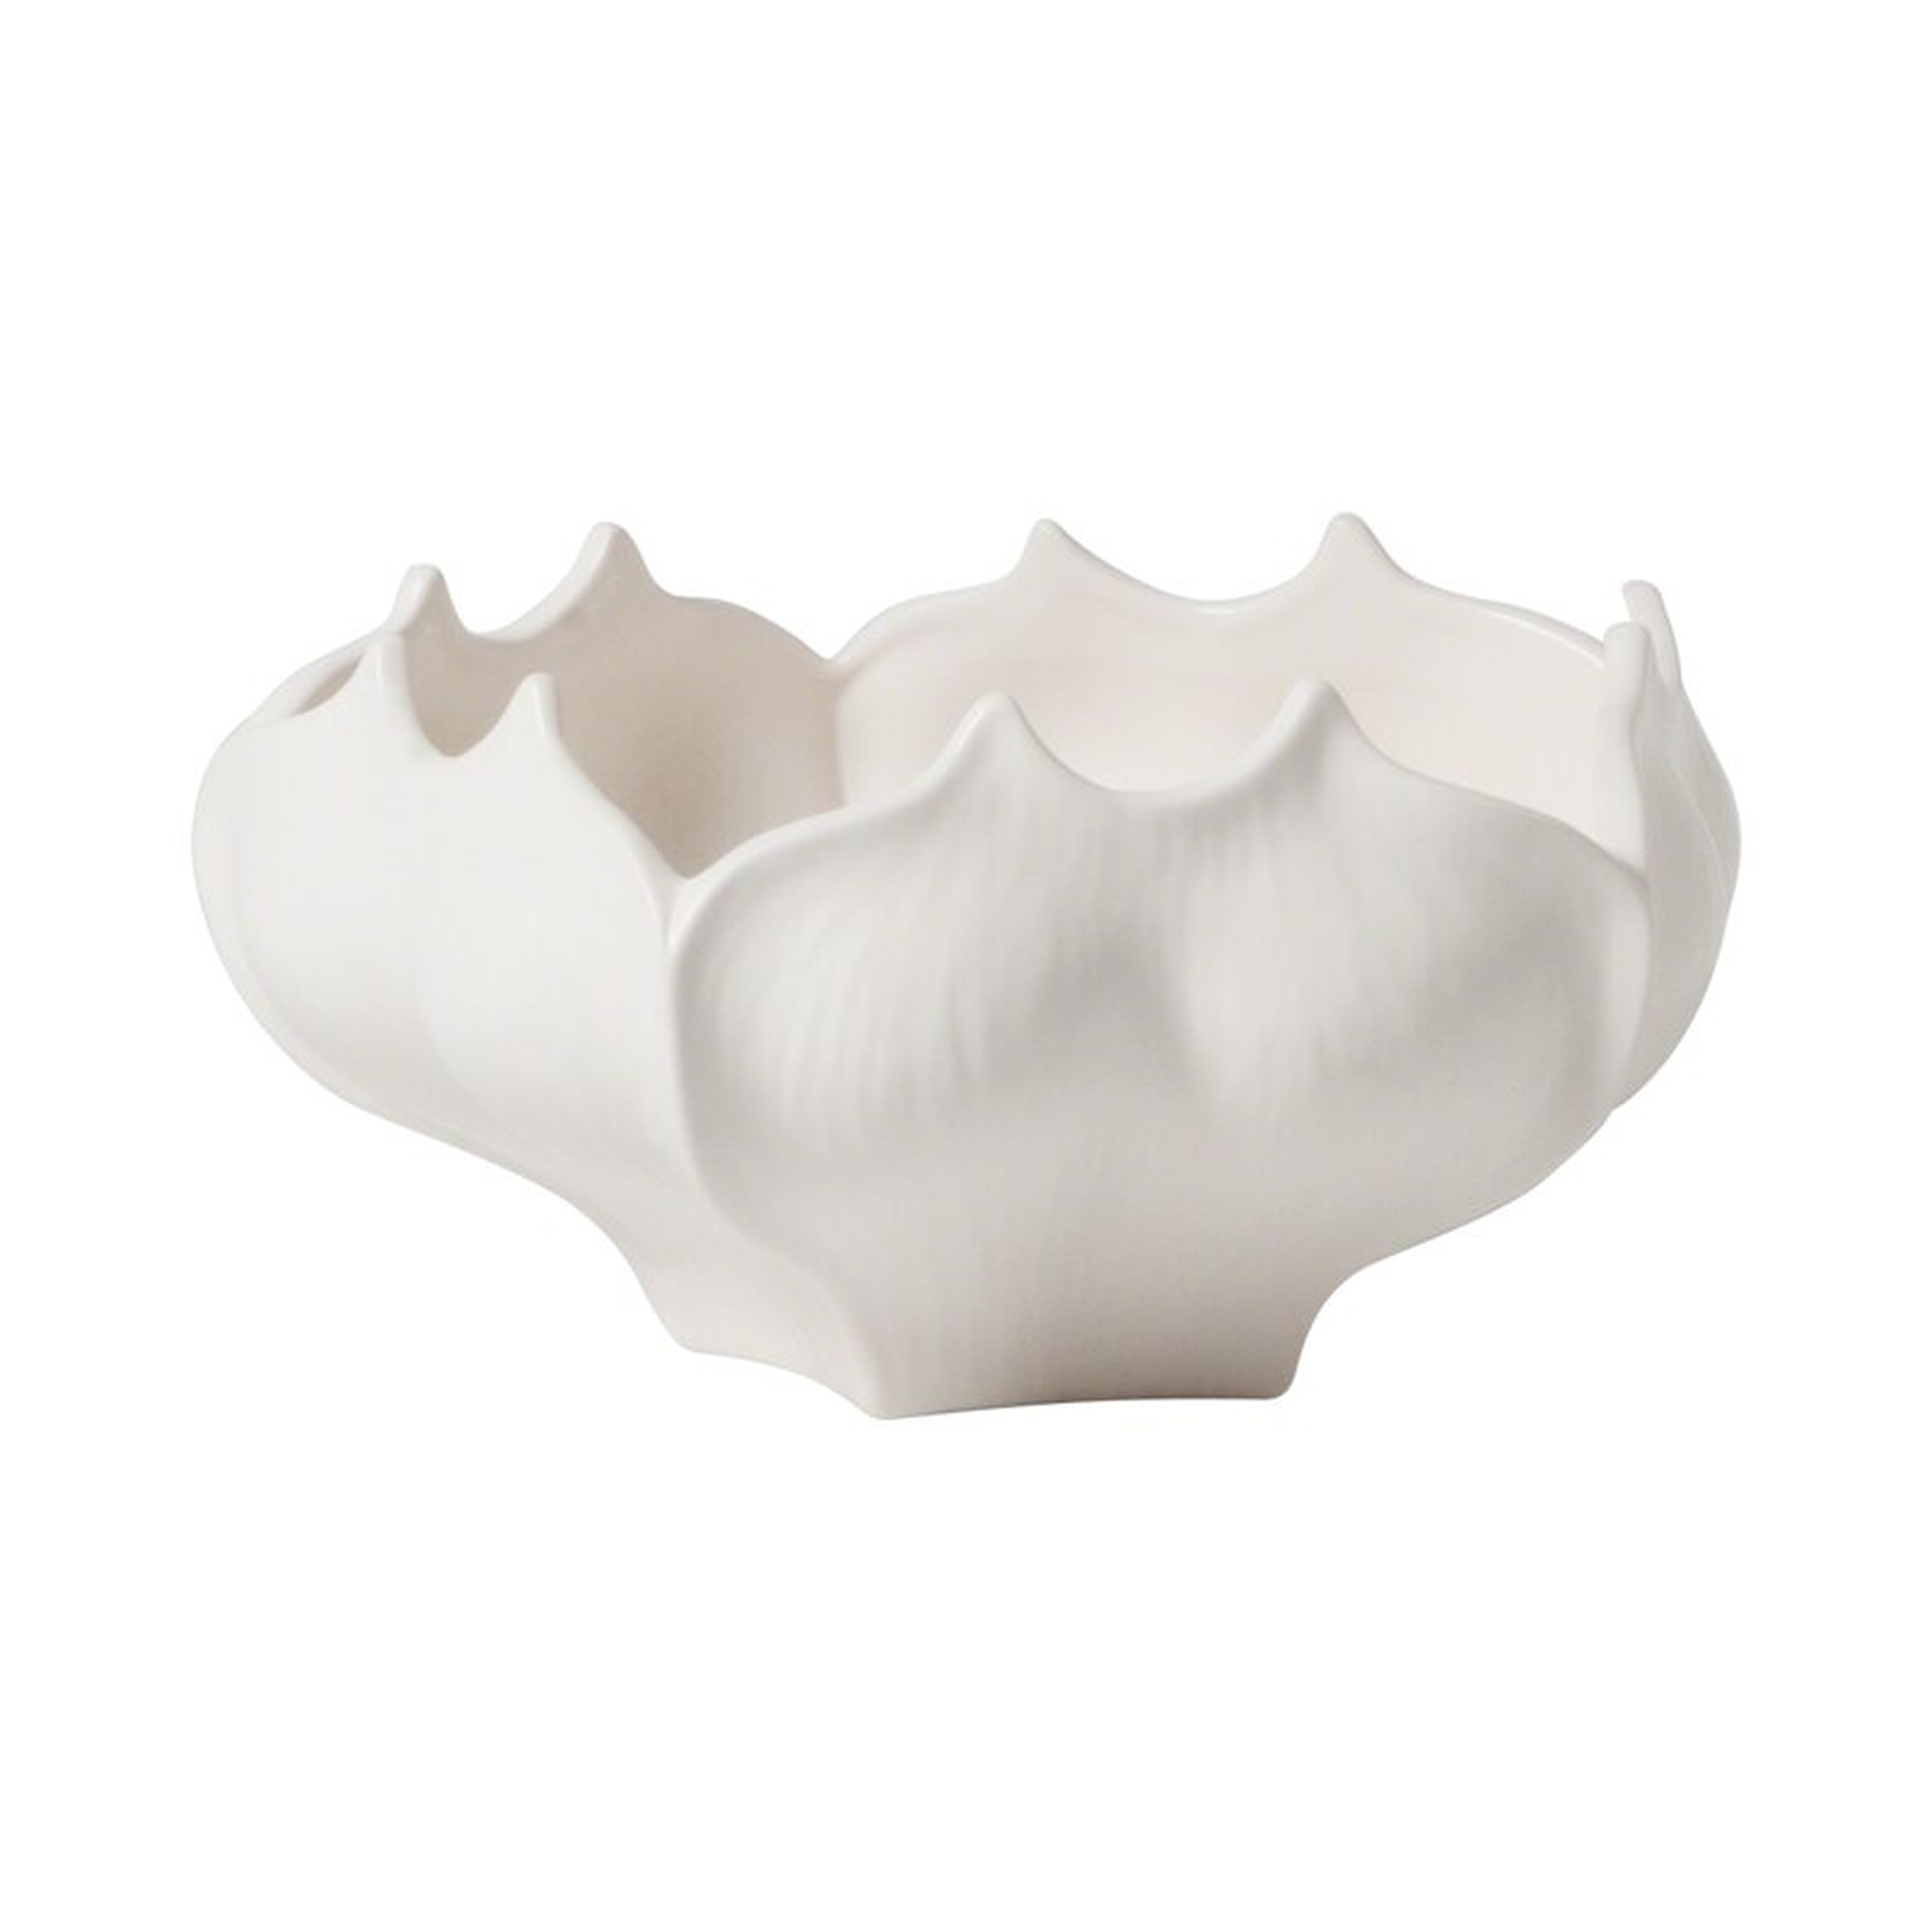 Star Fruit Ceramic Abstract Farmhouse Decorative Bowl in White - Wayfair